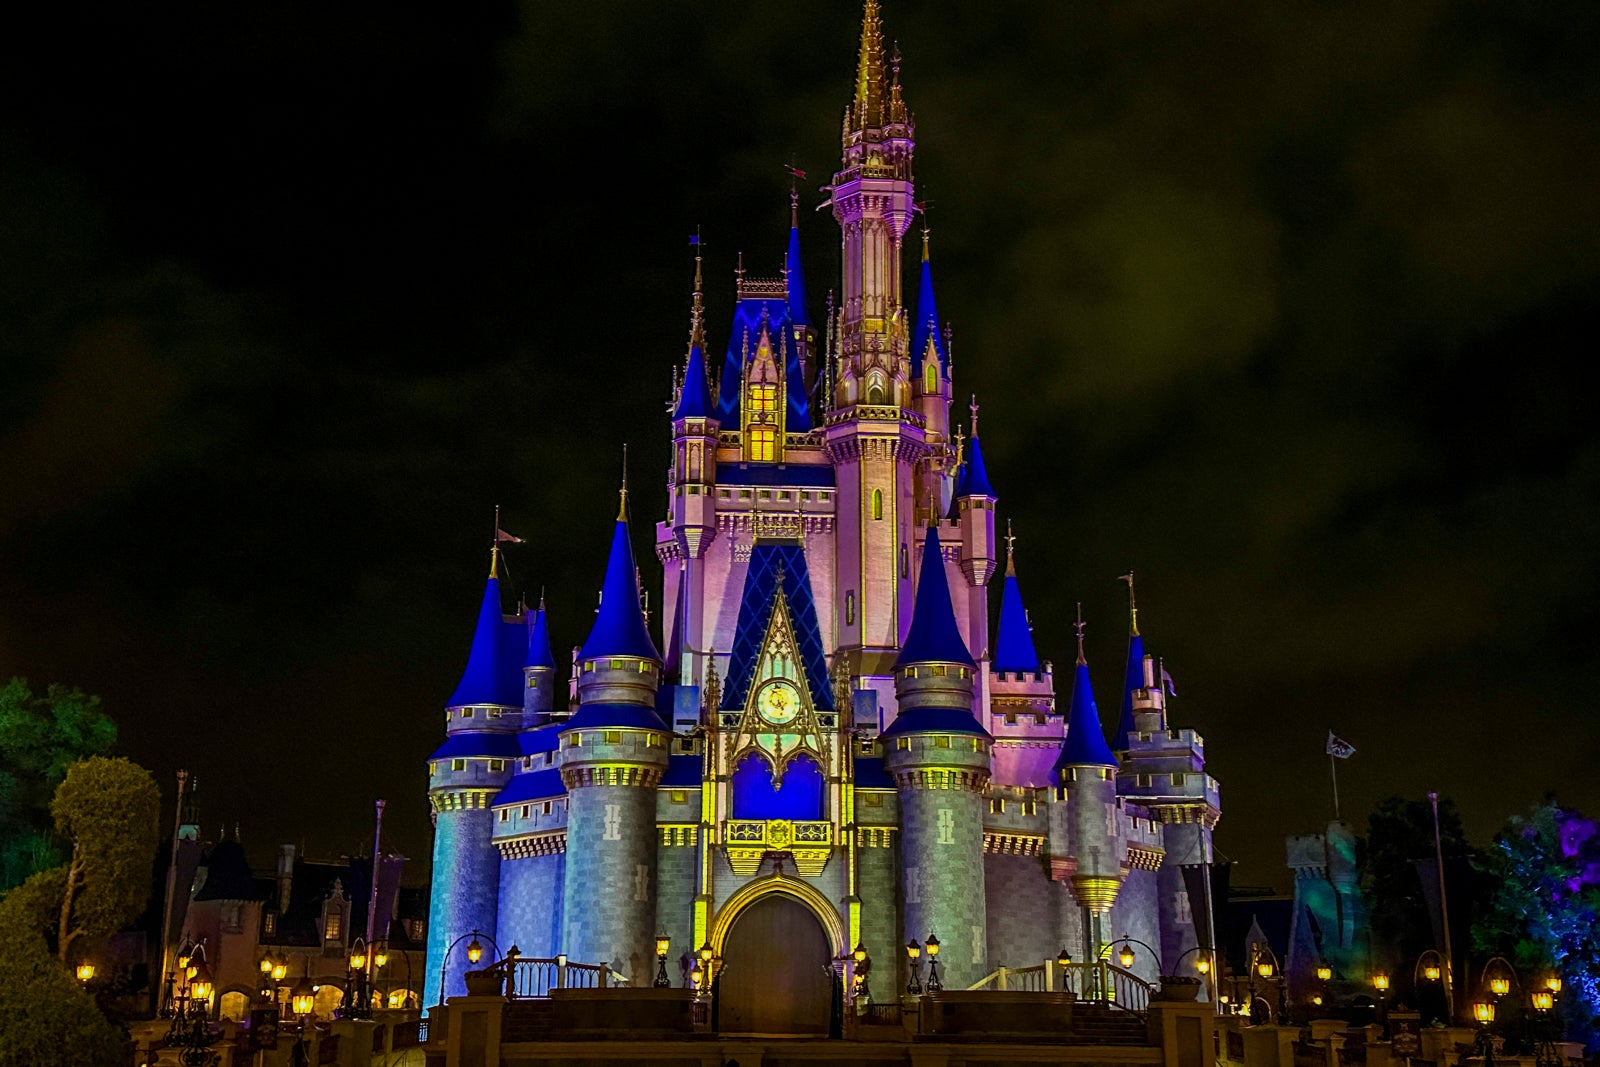 Cinderella Castle at Disney's Magic Kingdom at night